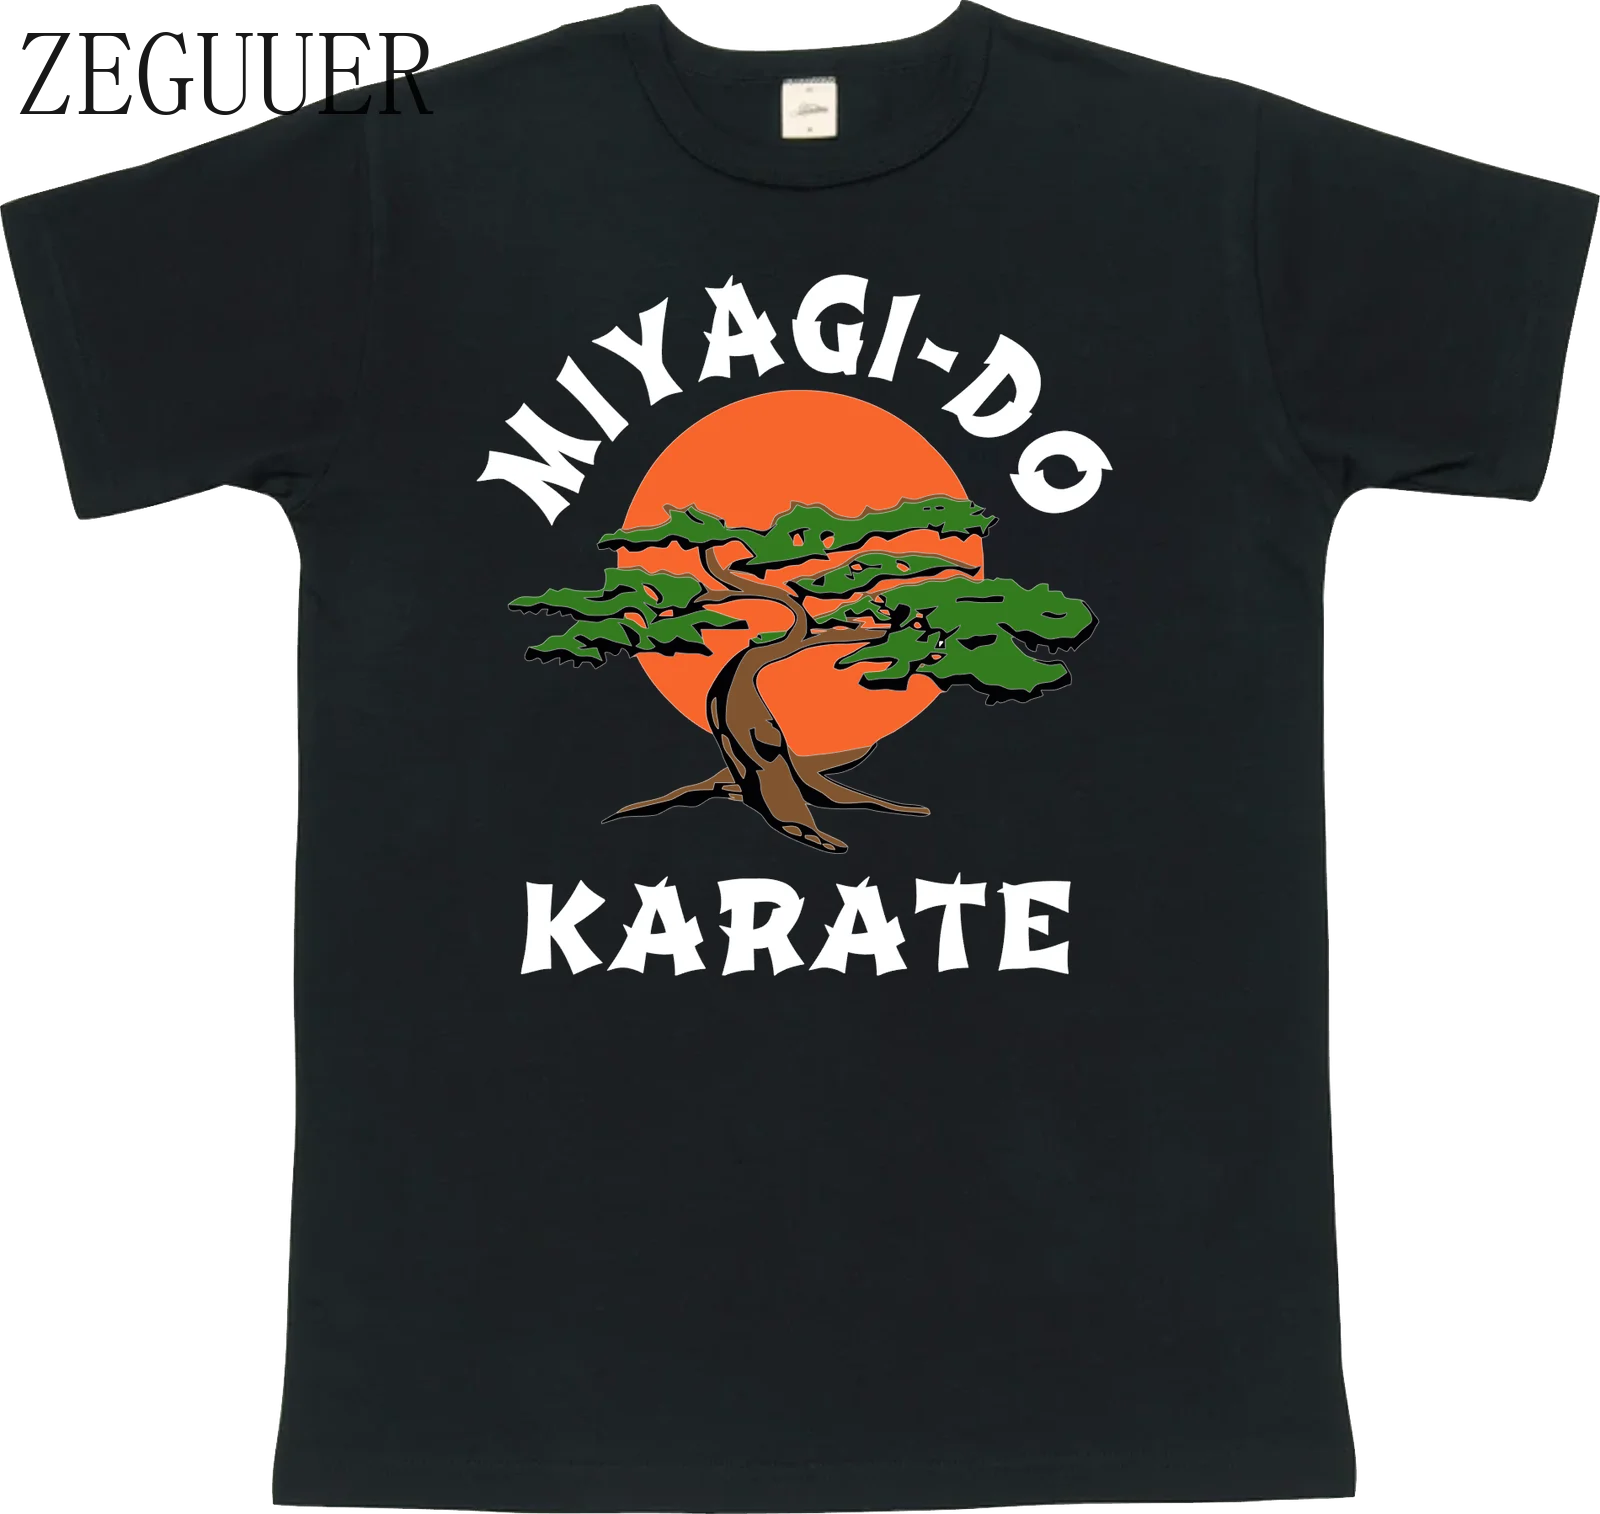 Japanese Printed Miyagi Do Karate Cobra Kai T-Shirt 90s New Summer Casual Cotton Vintage Graphic Tee Shirt Streetwear Aesthetic